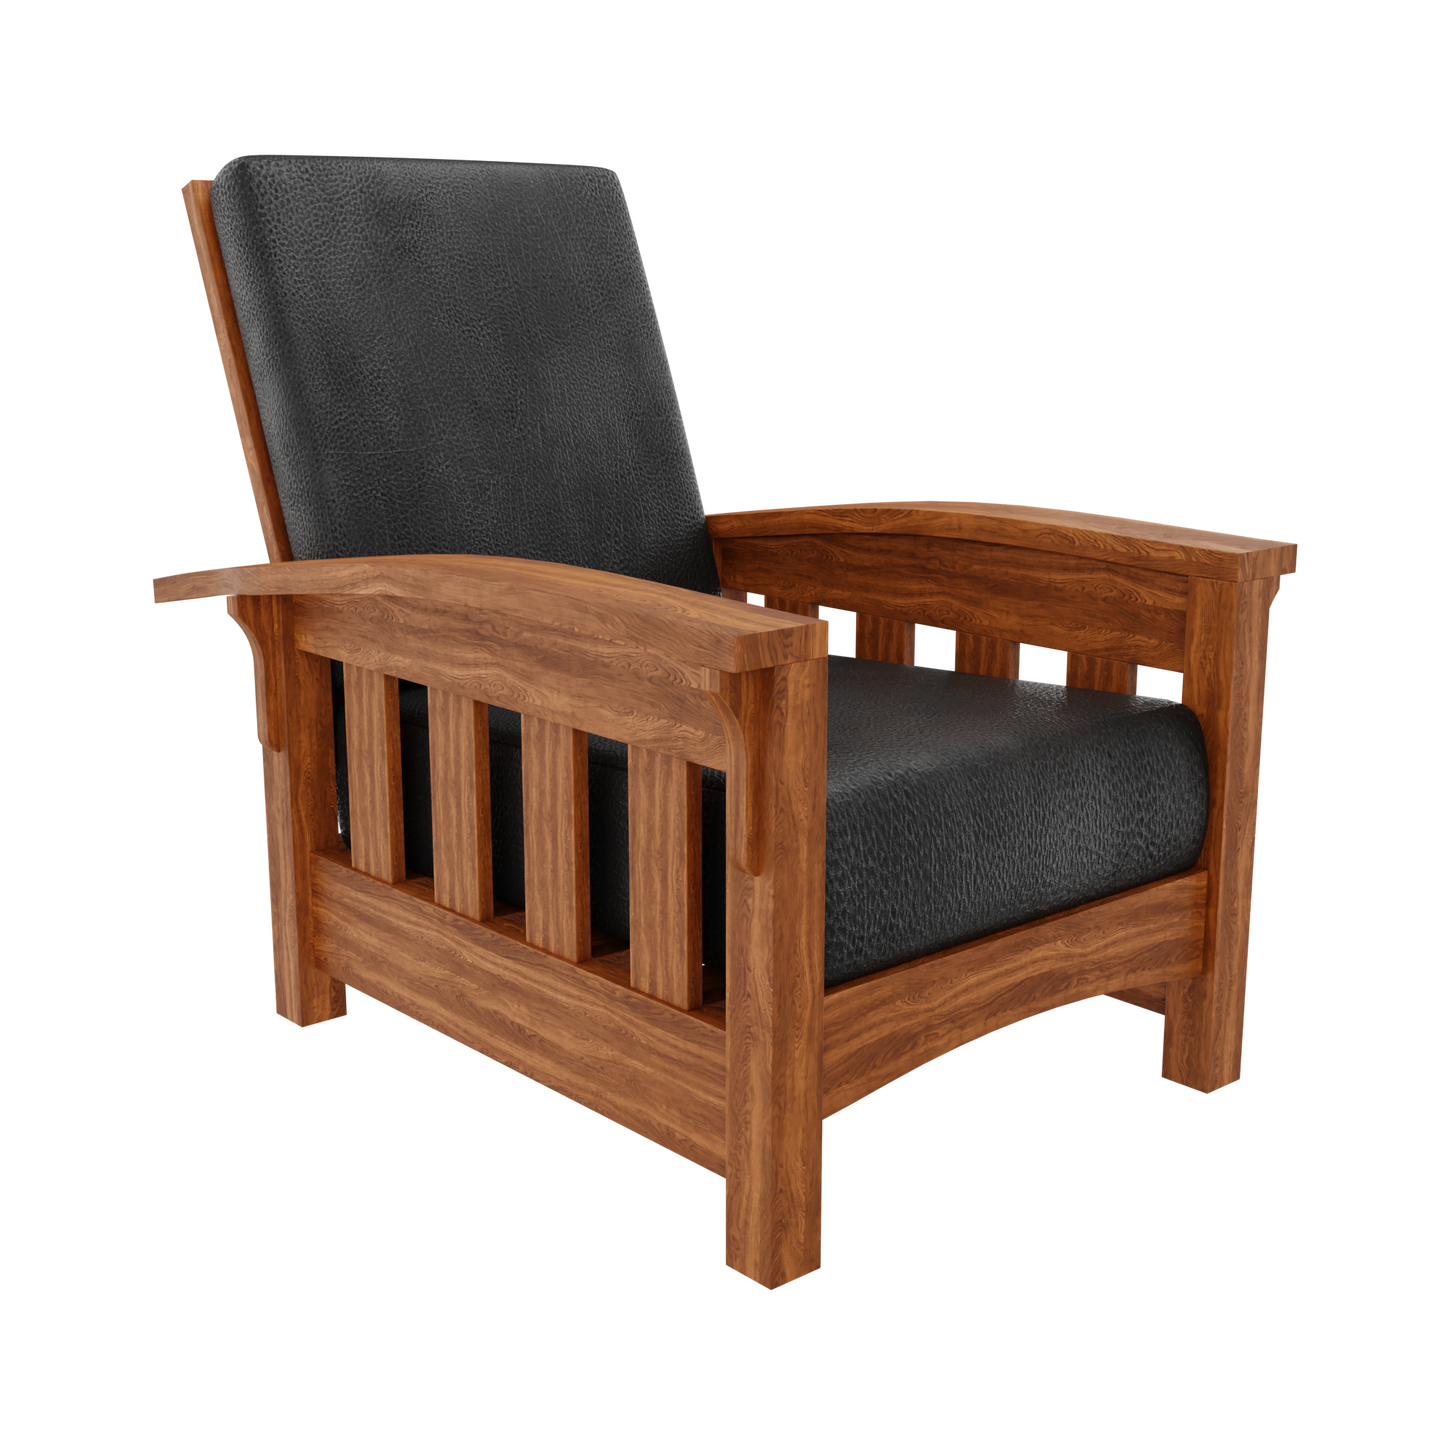 Bent Arm Slat Morris Chair